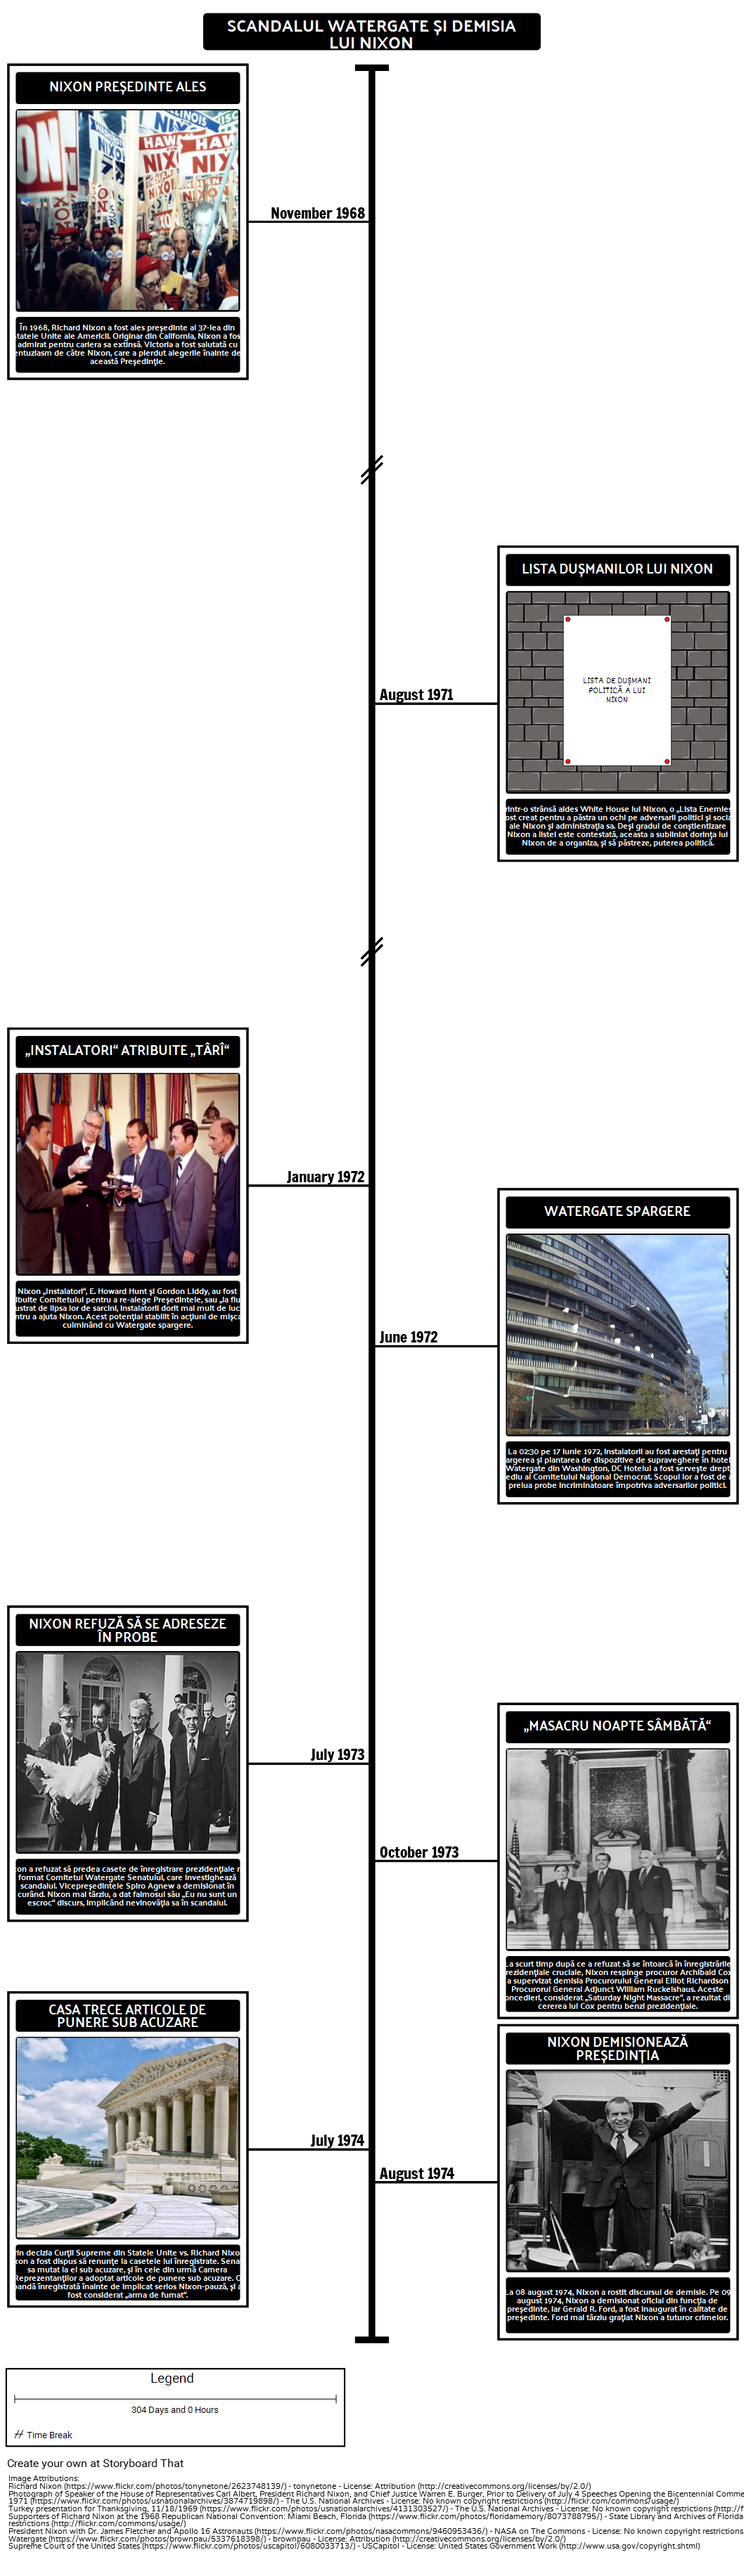 Cronologia Watergate Scandal și Demisia lui Nixon